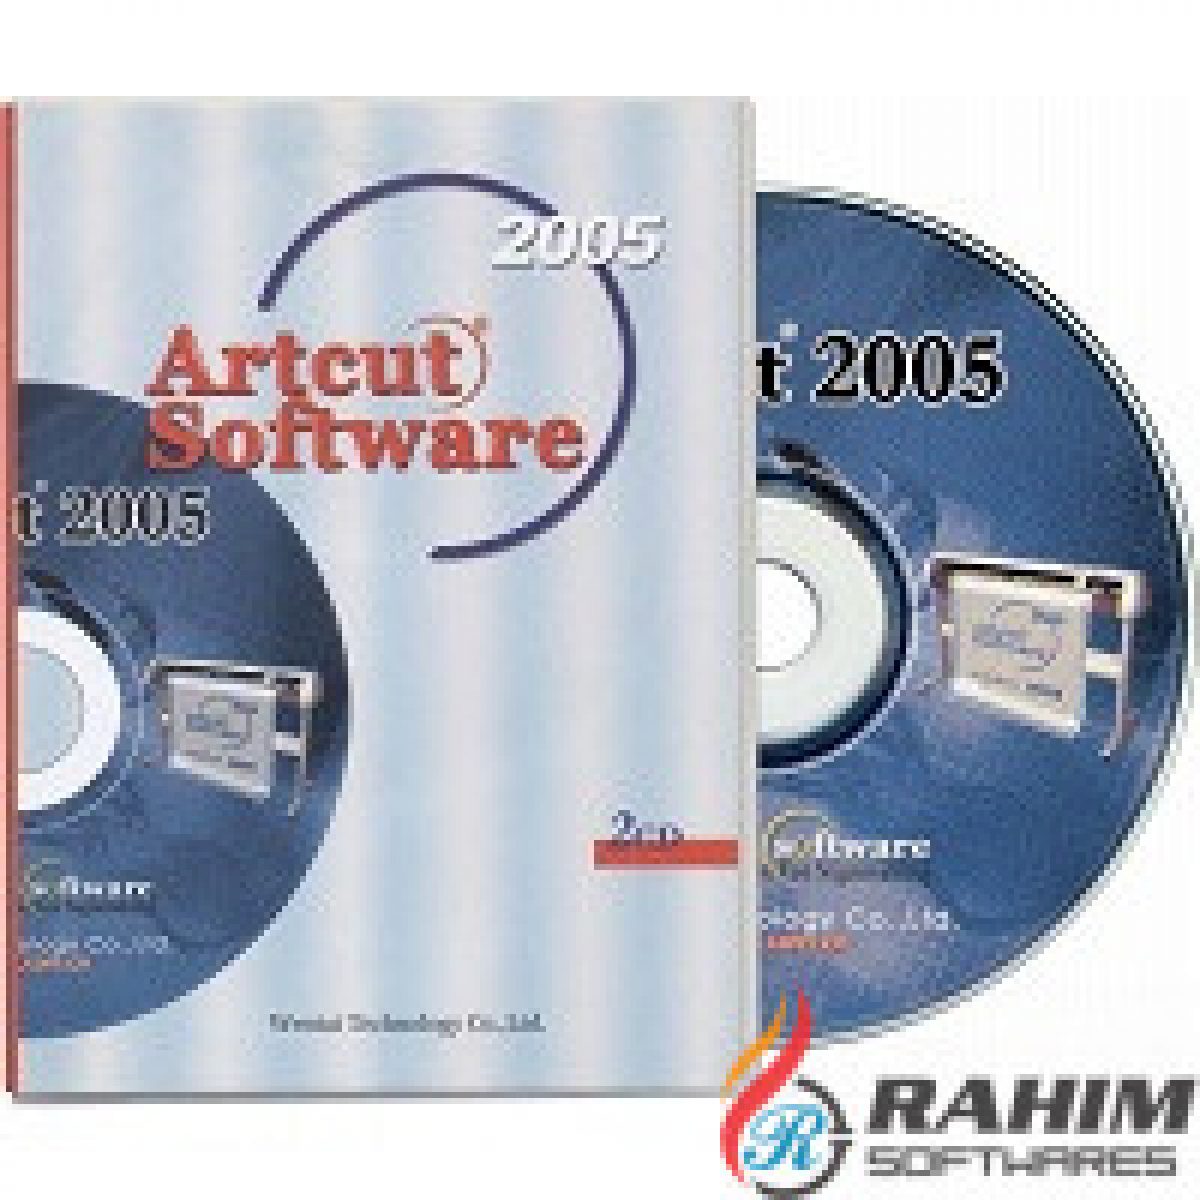 artcut6 plotter software and artcut grapic disc